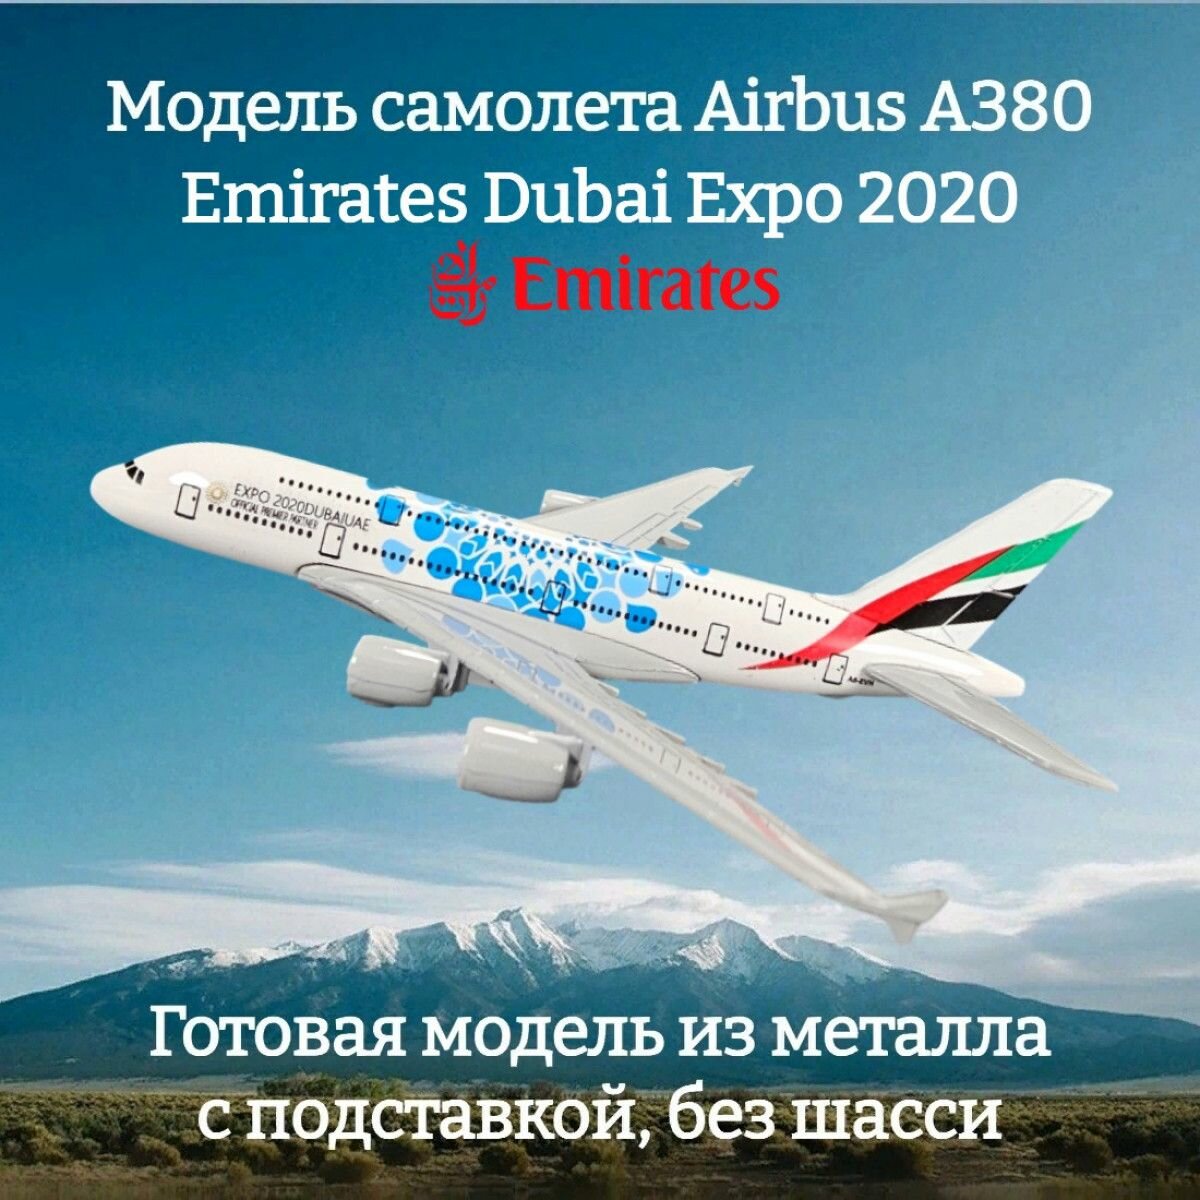 Модель самолета Airbus A380 Emirates Dubai Expo 2020 длина 14 см (без шасси)